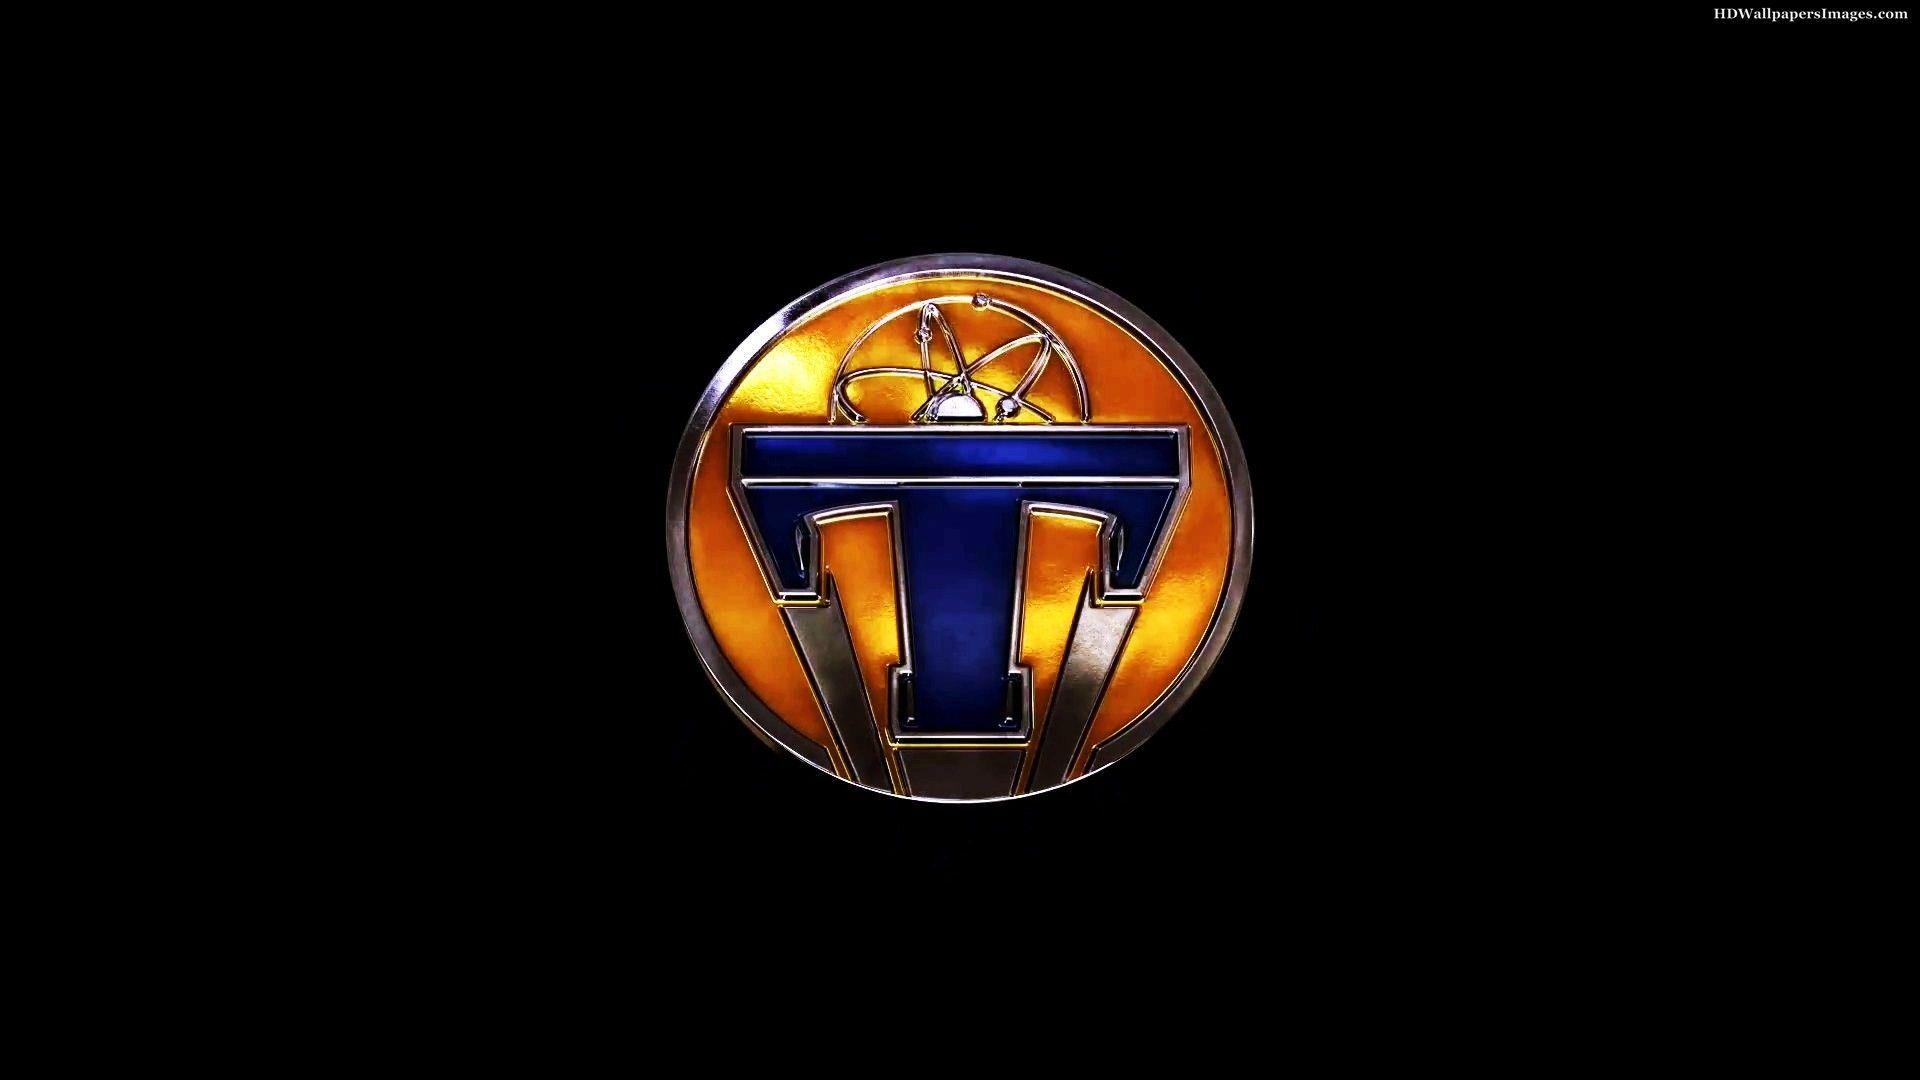 Tomorrowland Logo Image. HD Wallpaper Image. The Future Used to